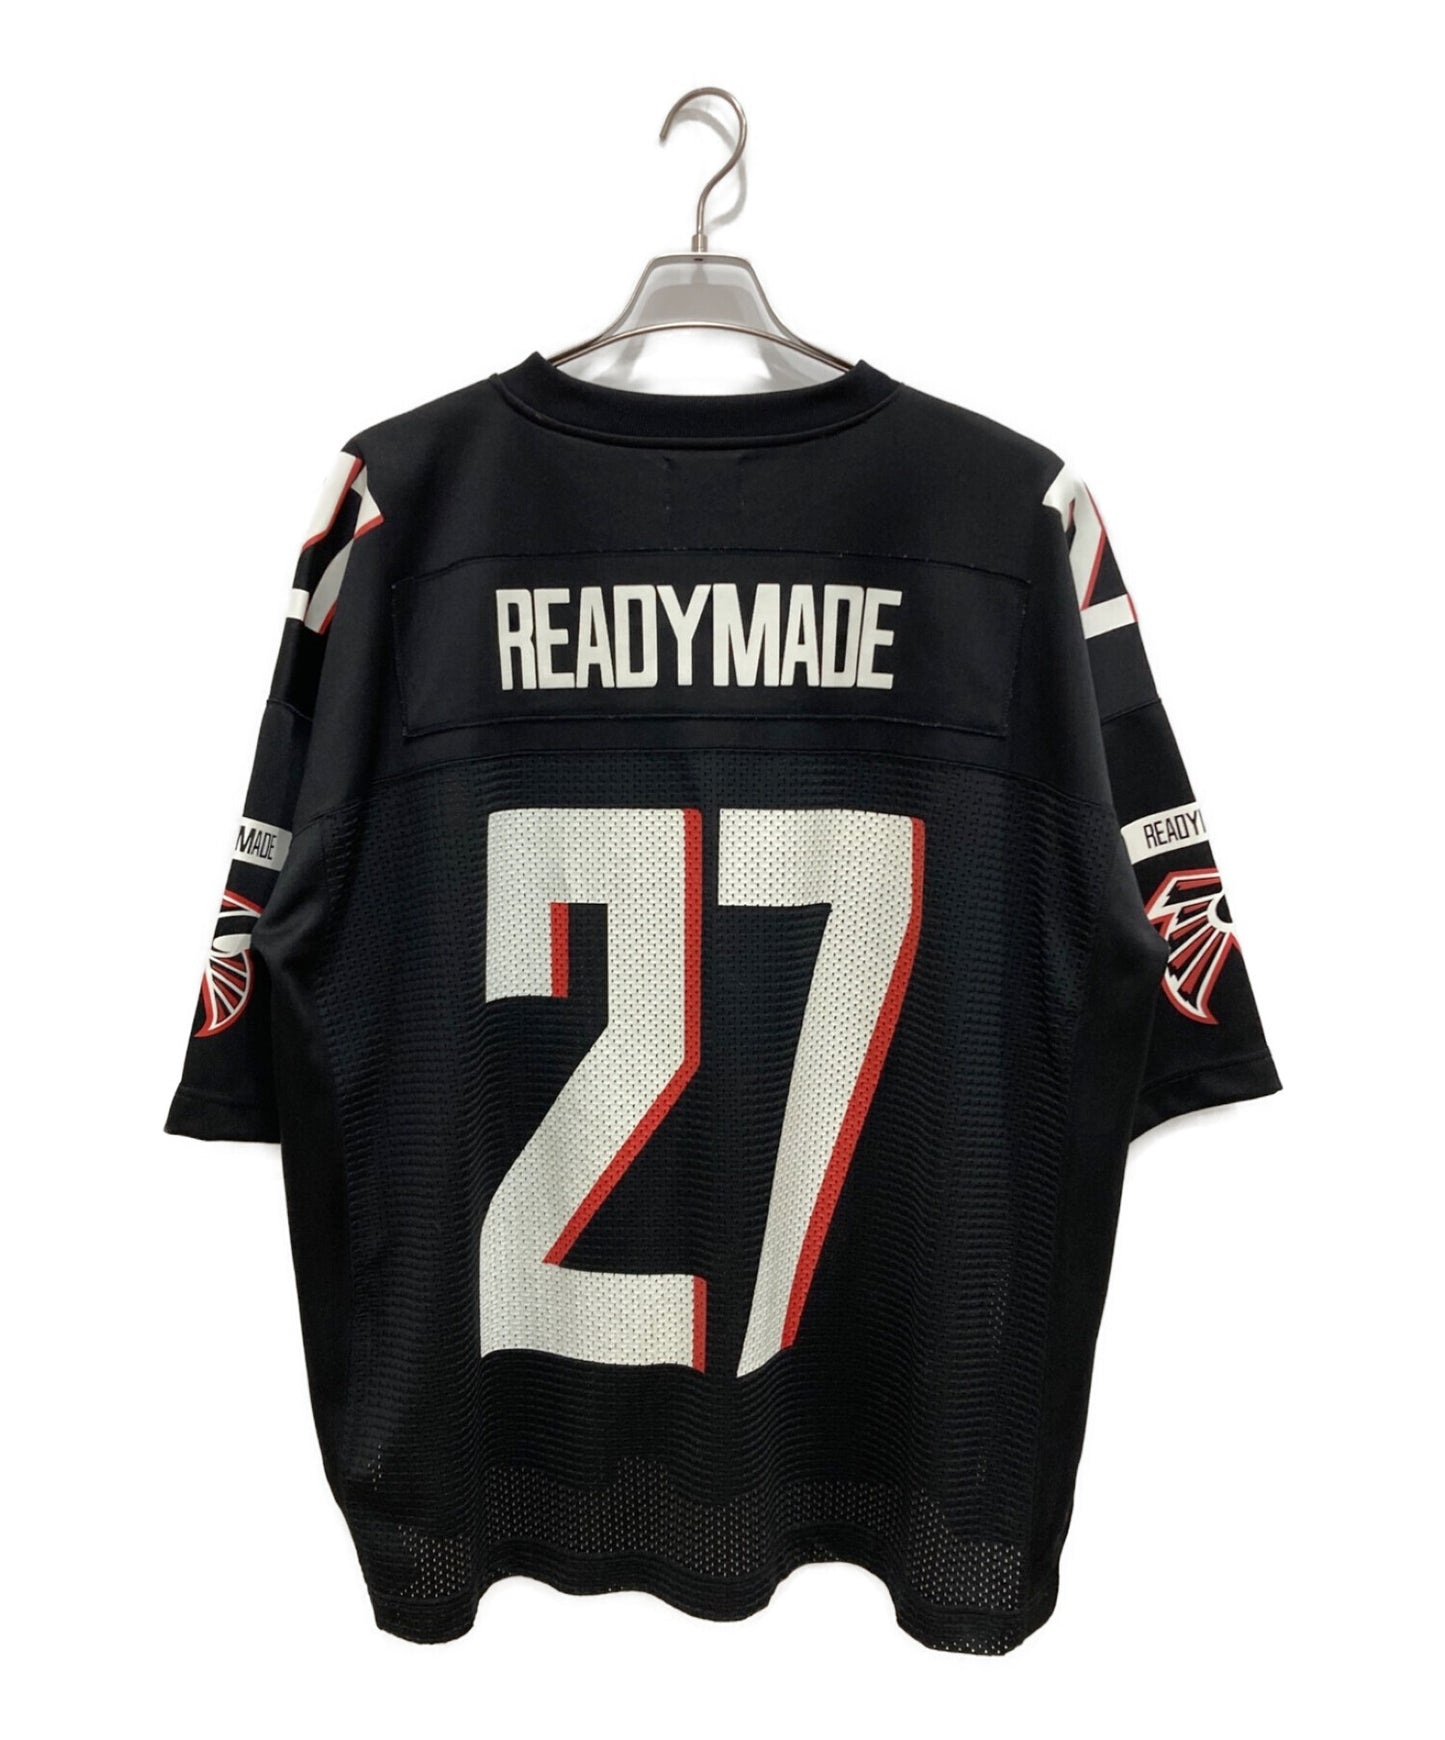 Readymade 게임 셔츠 Re-Co-BK-00-00-232